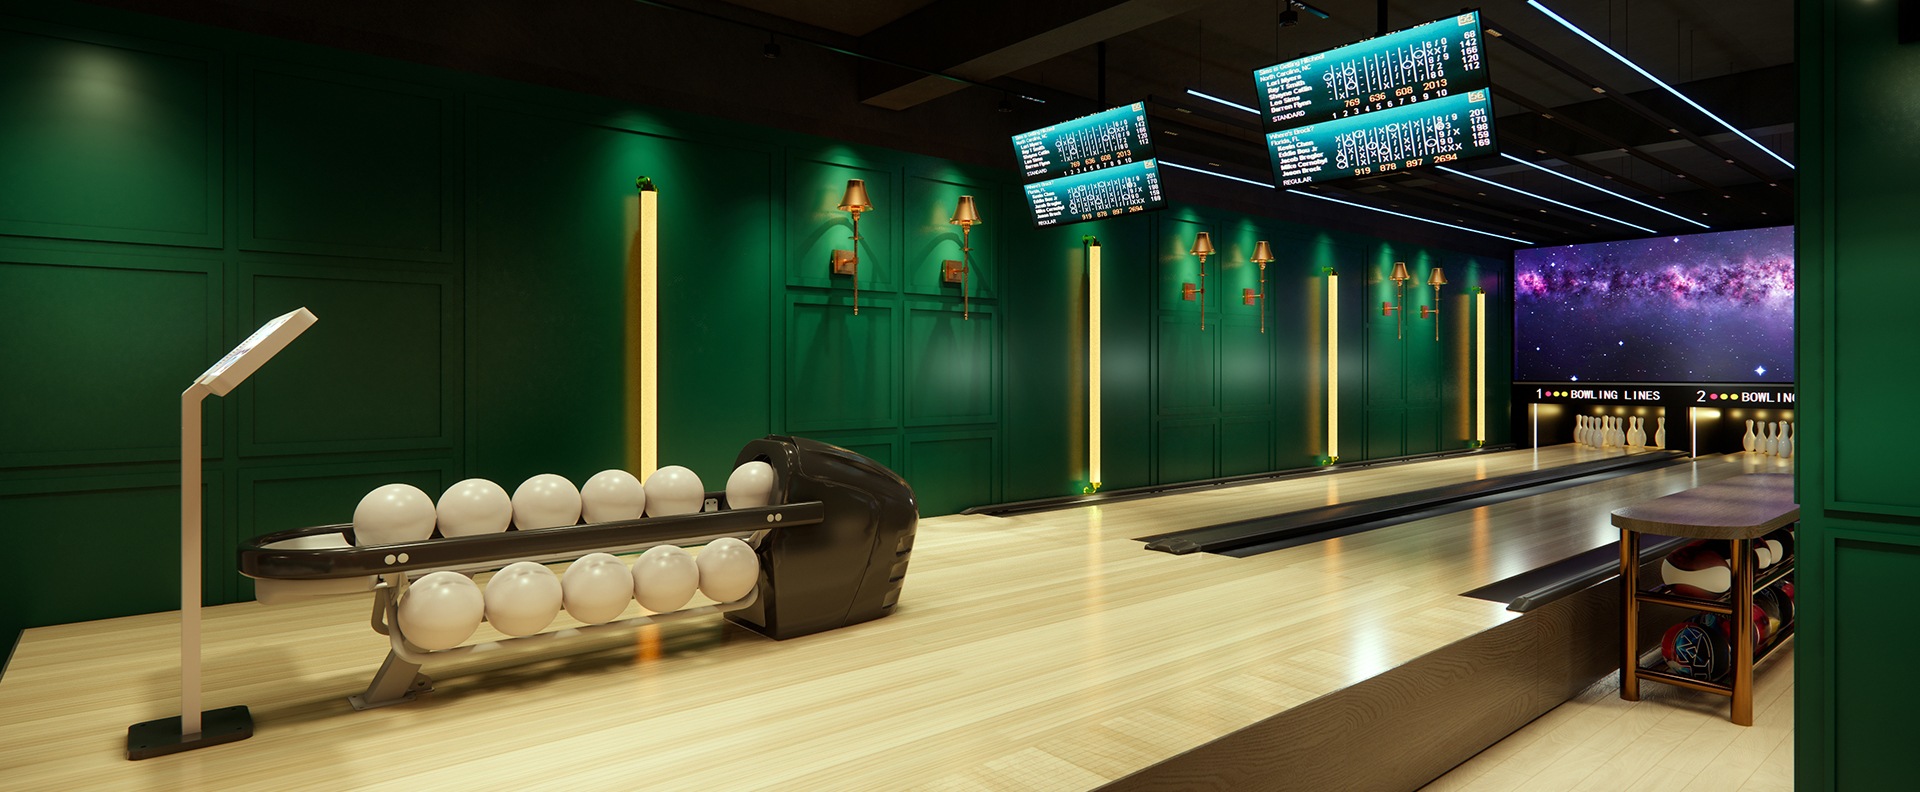 bowling-showroom-chfuntek